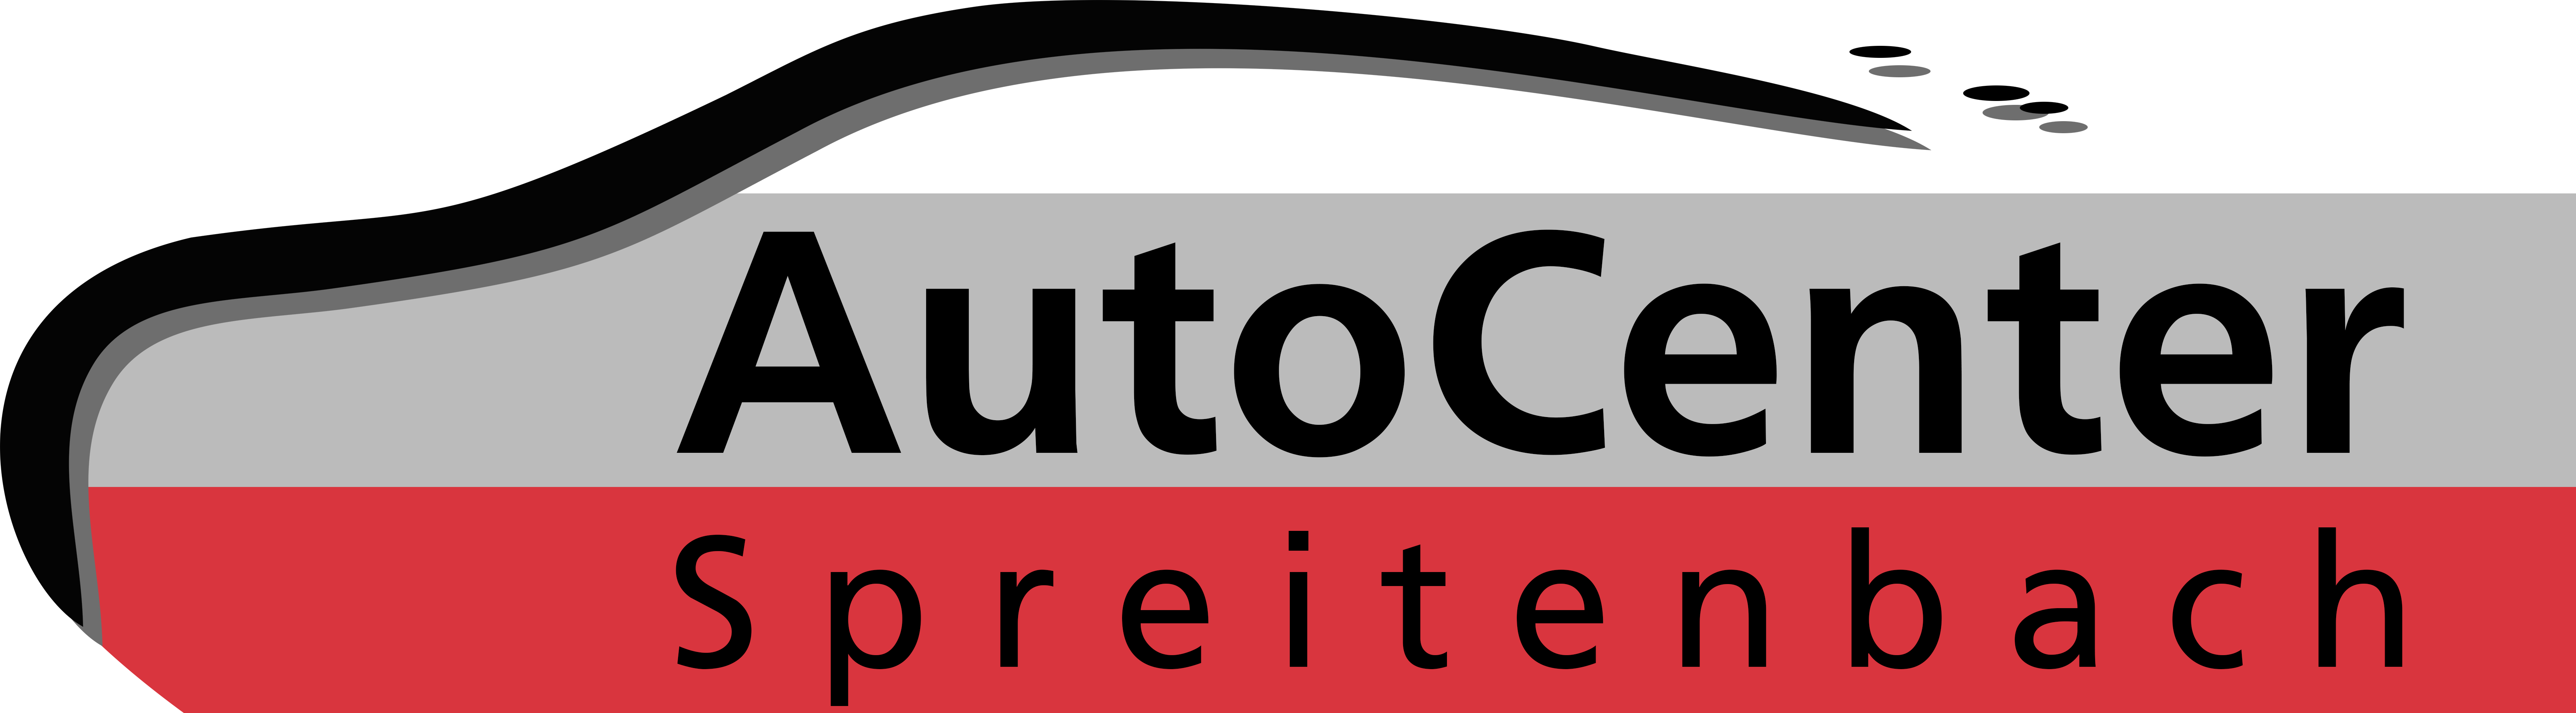 AutoCenter Spreitenbach AG – Top Fahrzeuge zu super Preisen Logo